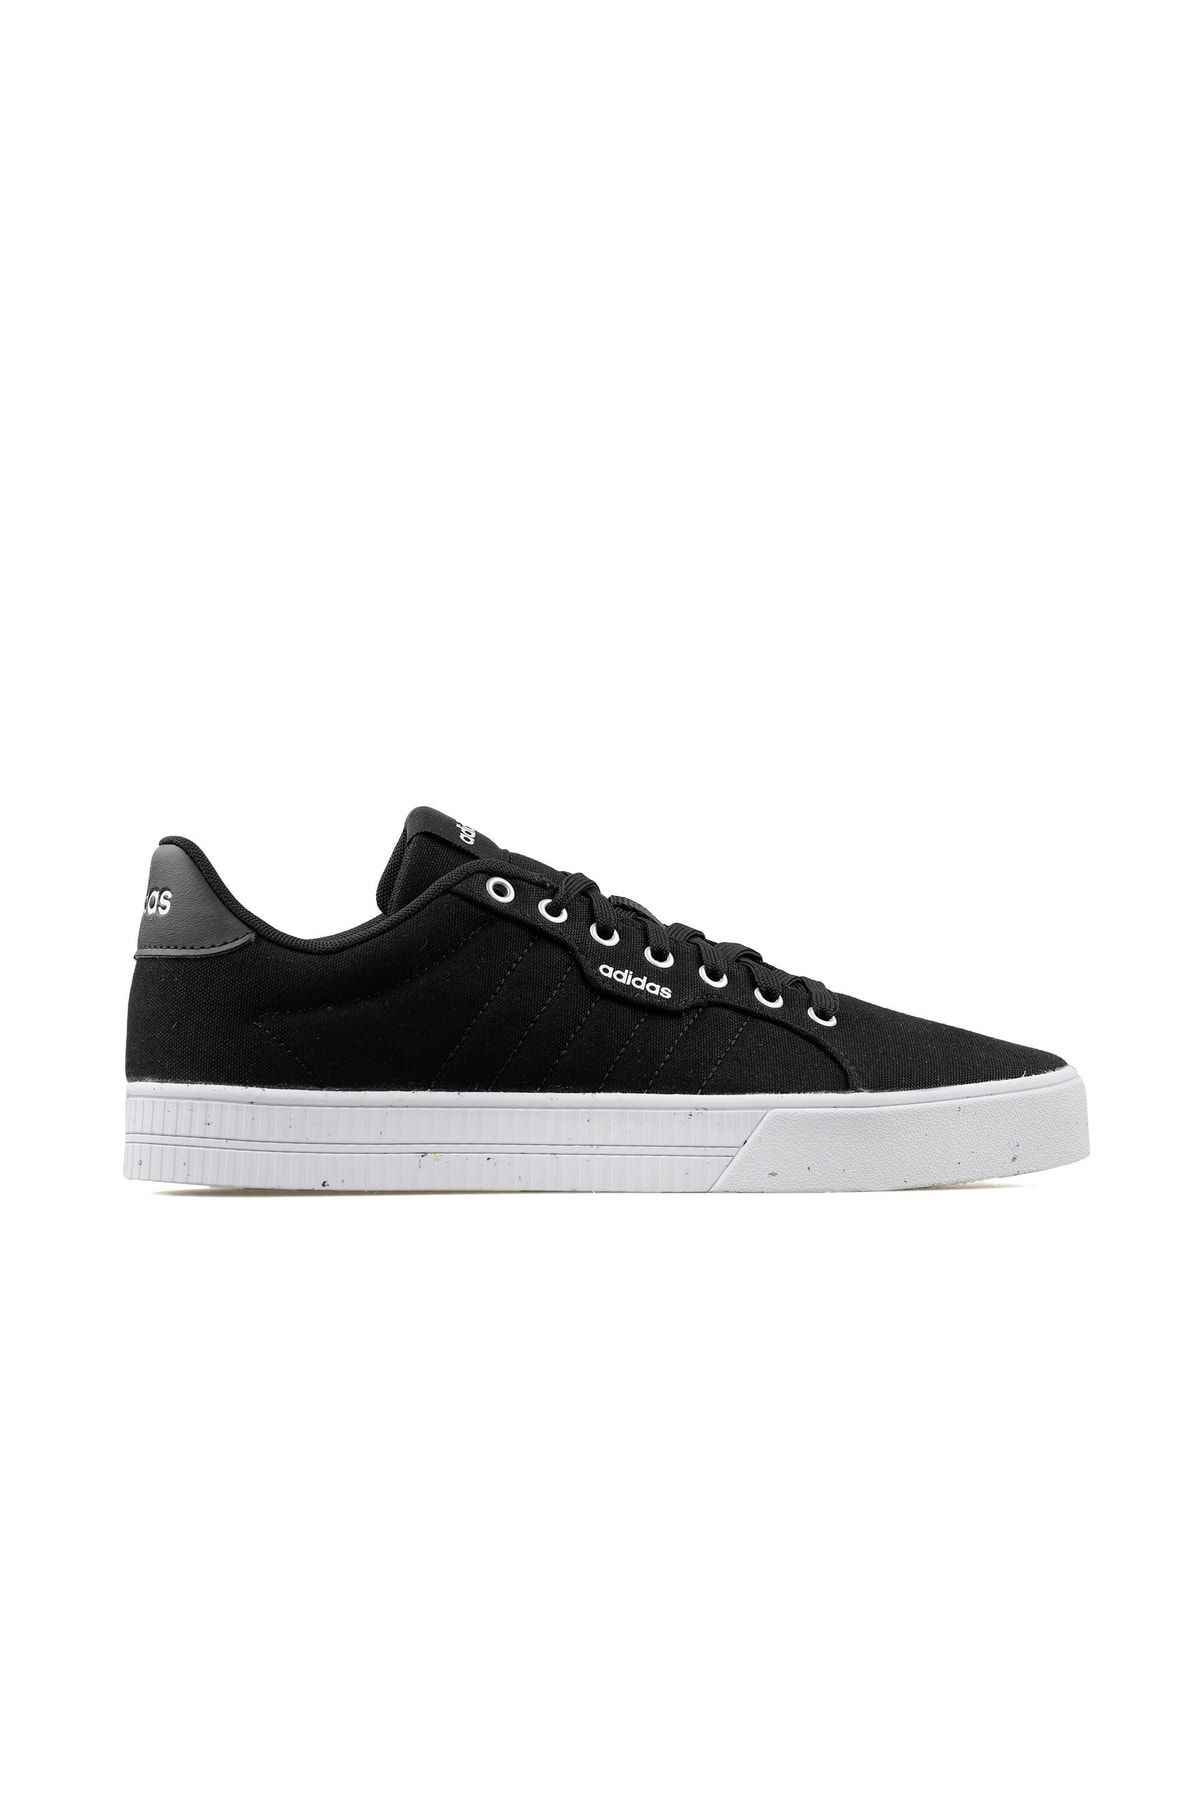 adidas Daily 3.0 Eco Erkek Skate Ayakkabısı Gy5487 Siyah